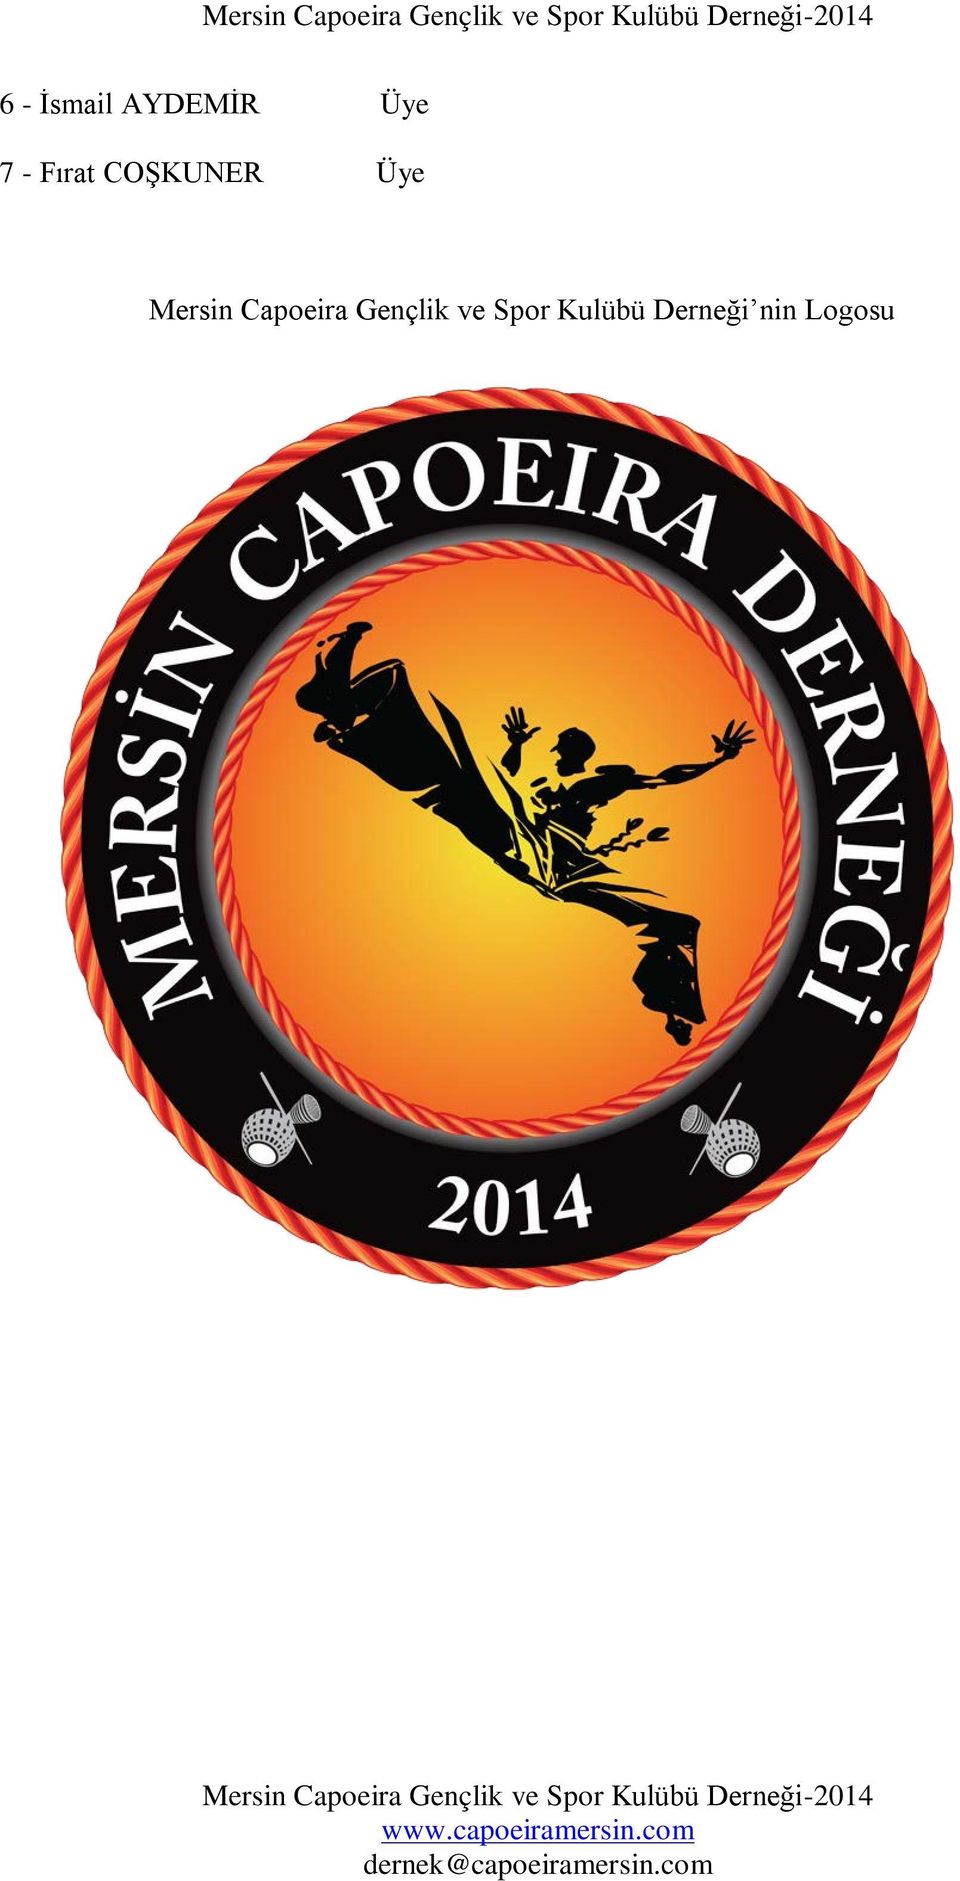 Mersin Capoeira Gençlik